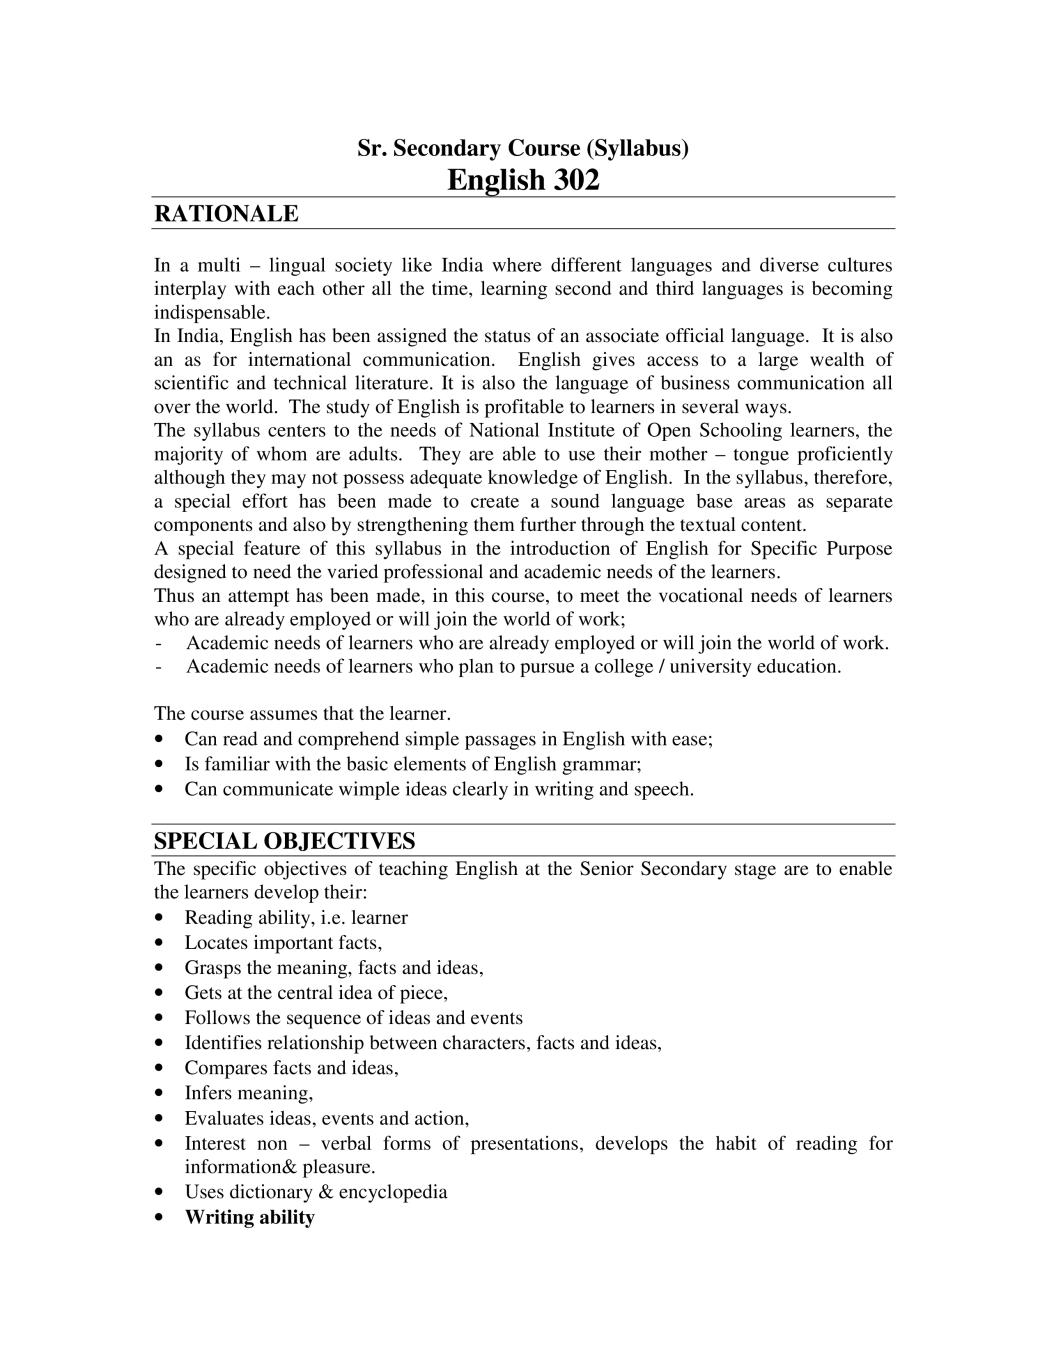 NIOS Class 12 Syllabus - English - Page 1